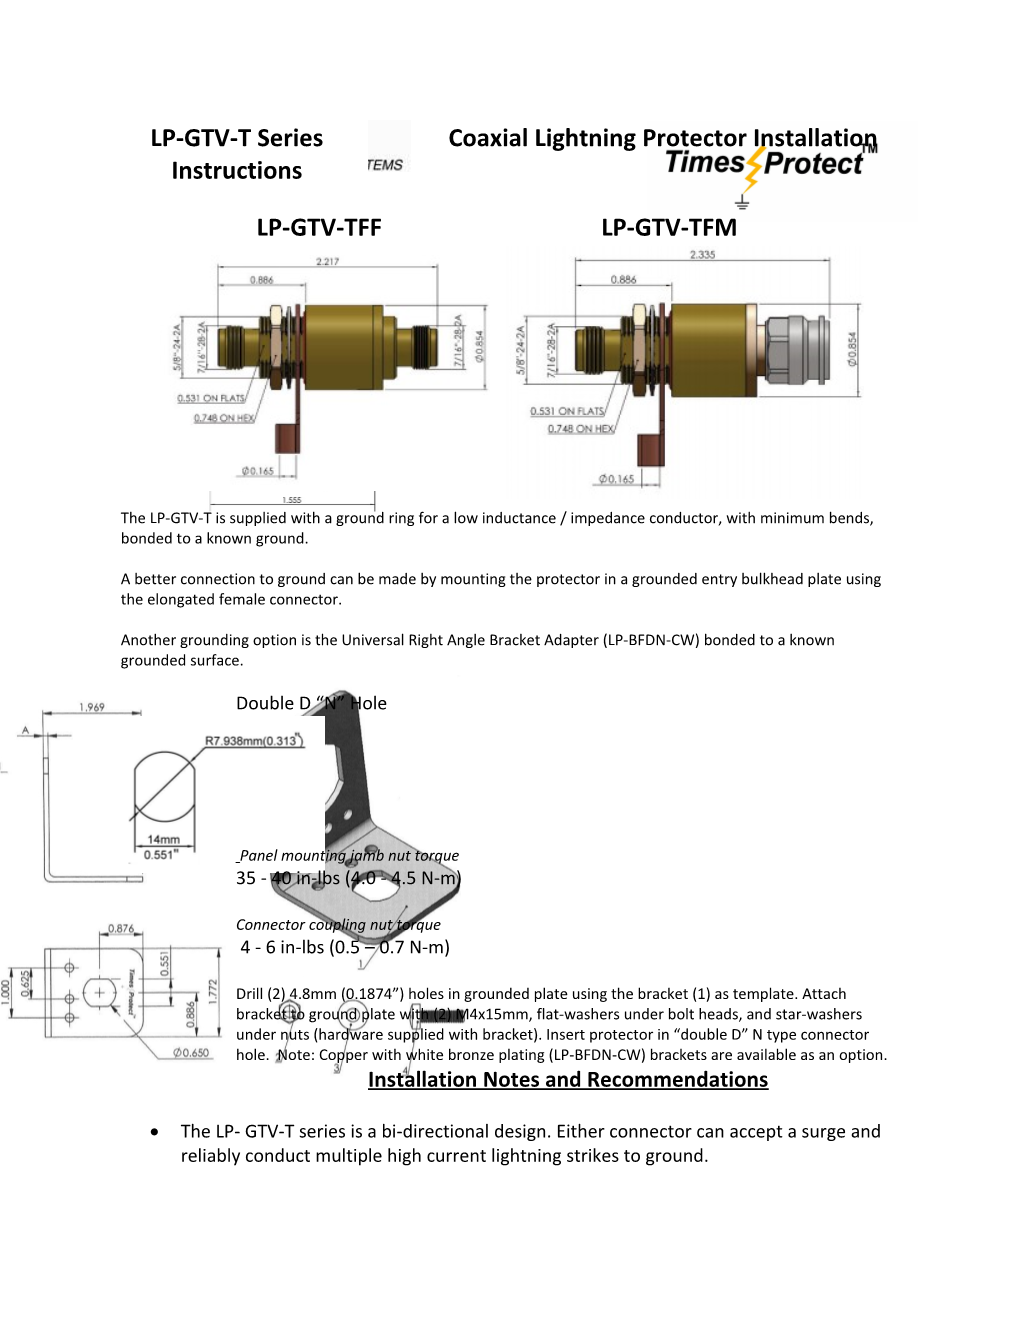 LP-GTV-T Series Coaxial Lightning Protector Installationinstructions